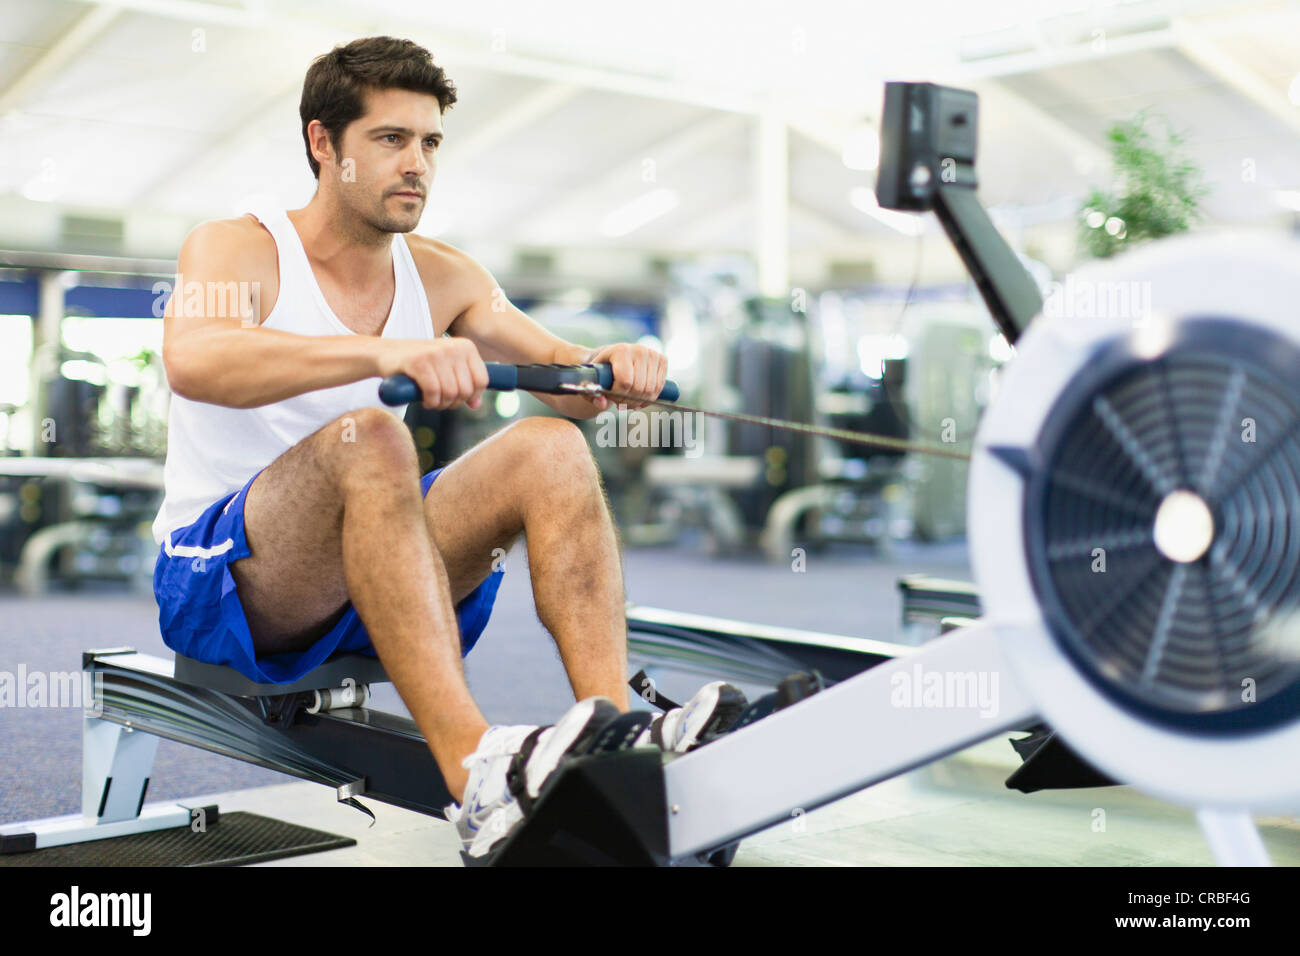 Man using rowing machine in gym Stock Photo